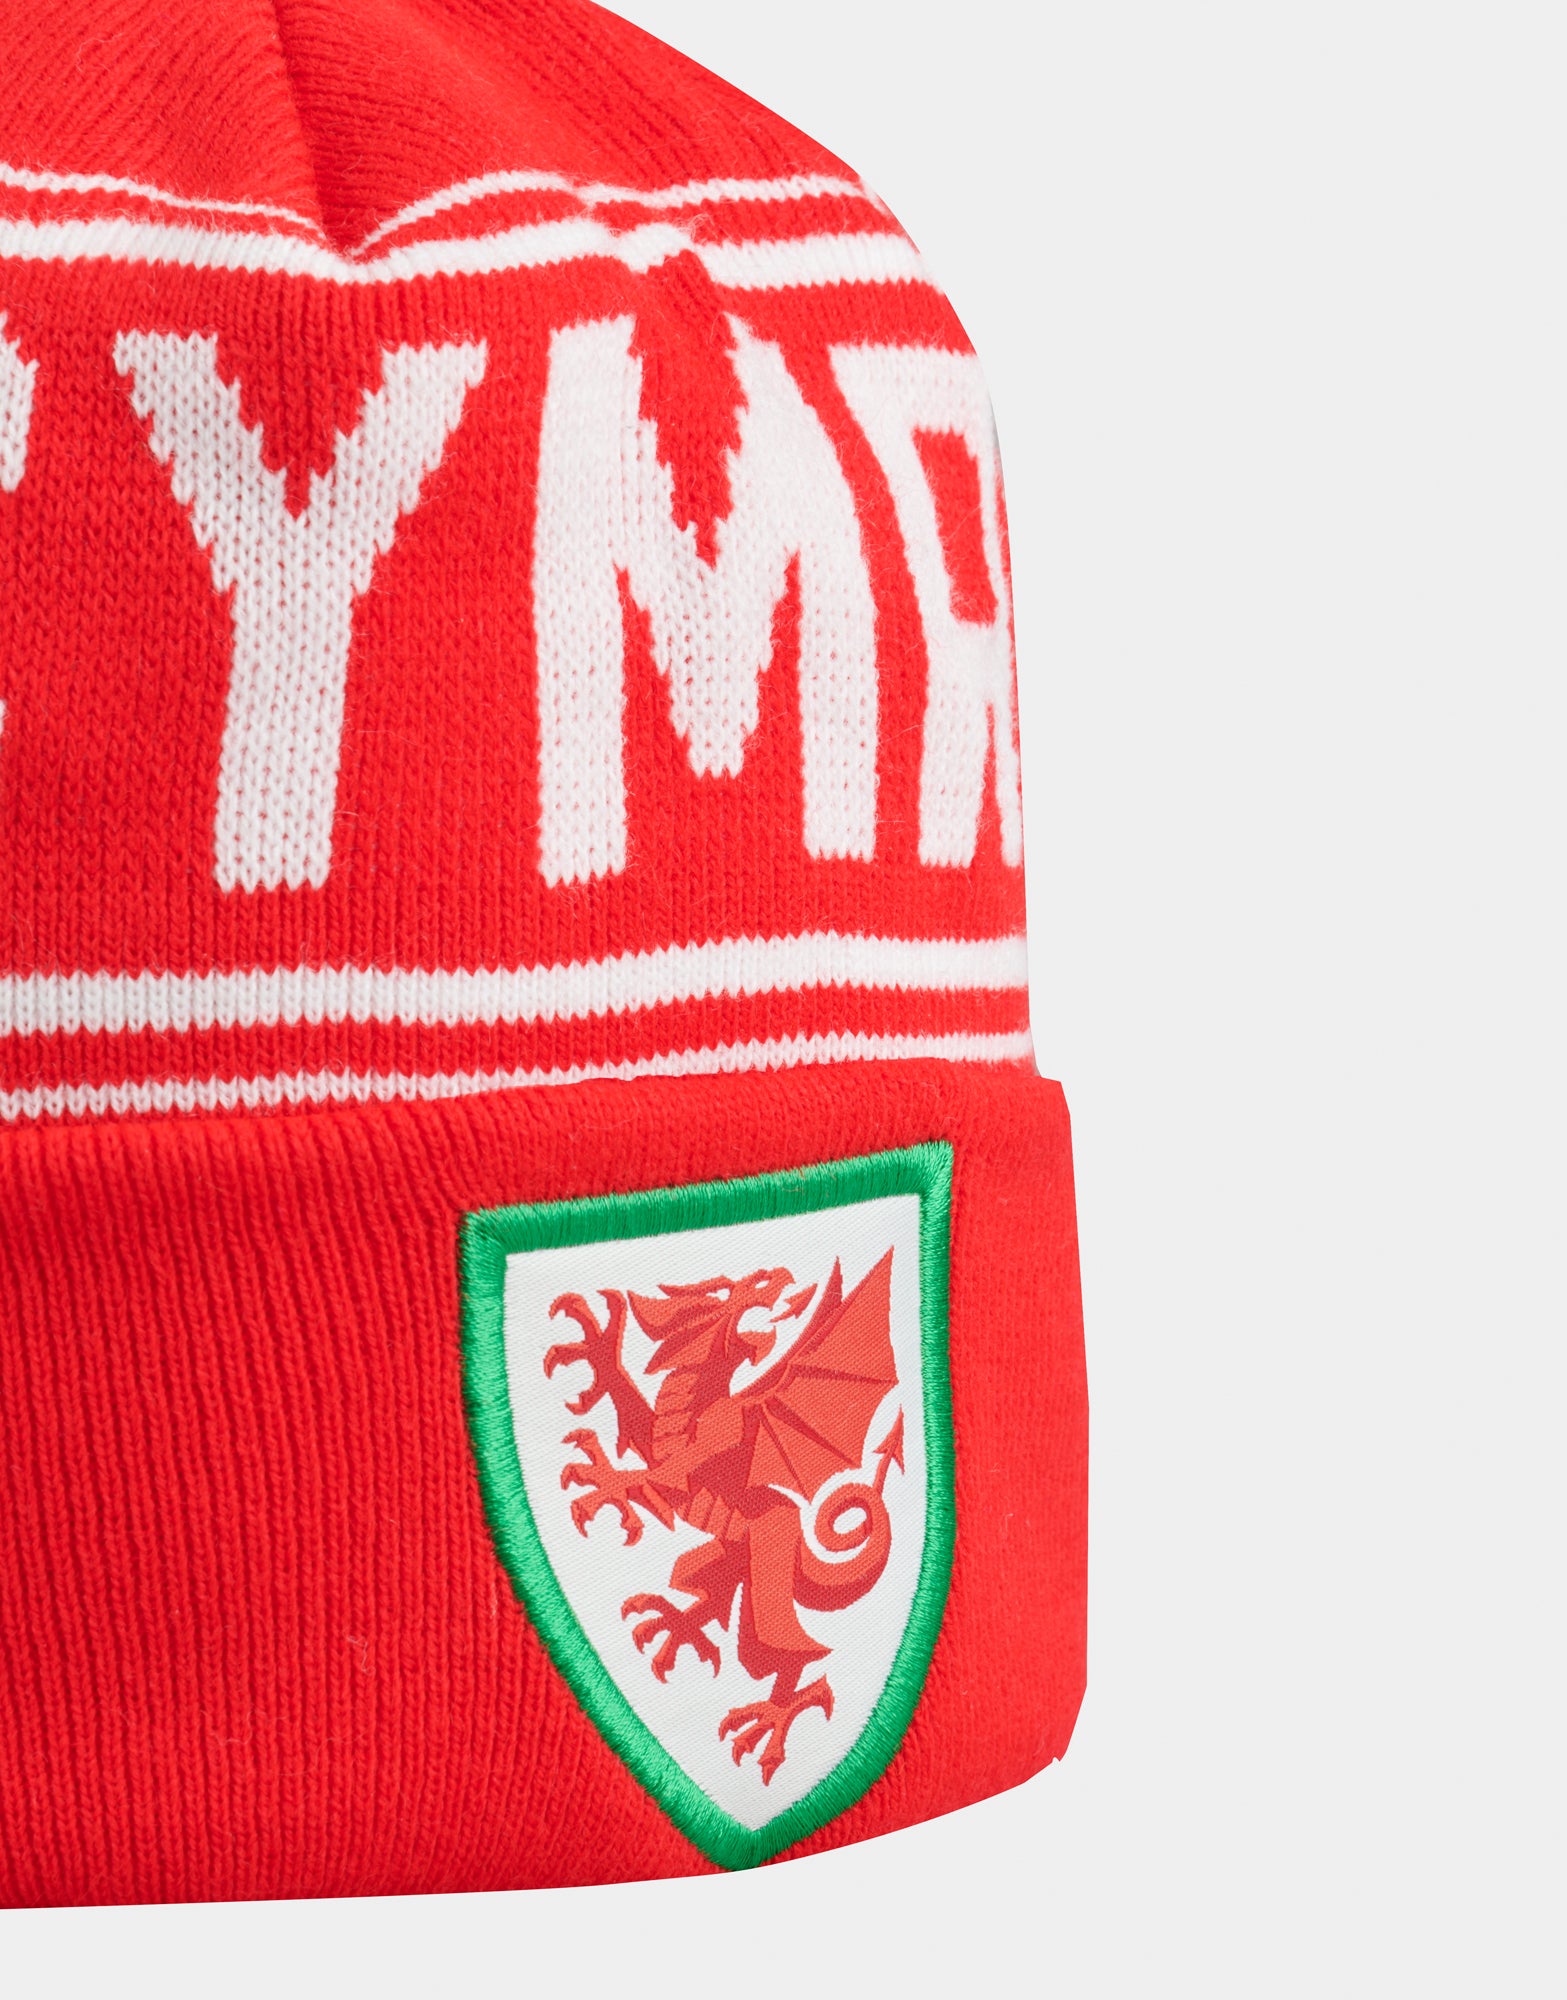 Official Team Wales CYMRU Bobble Hat